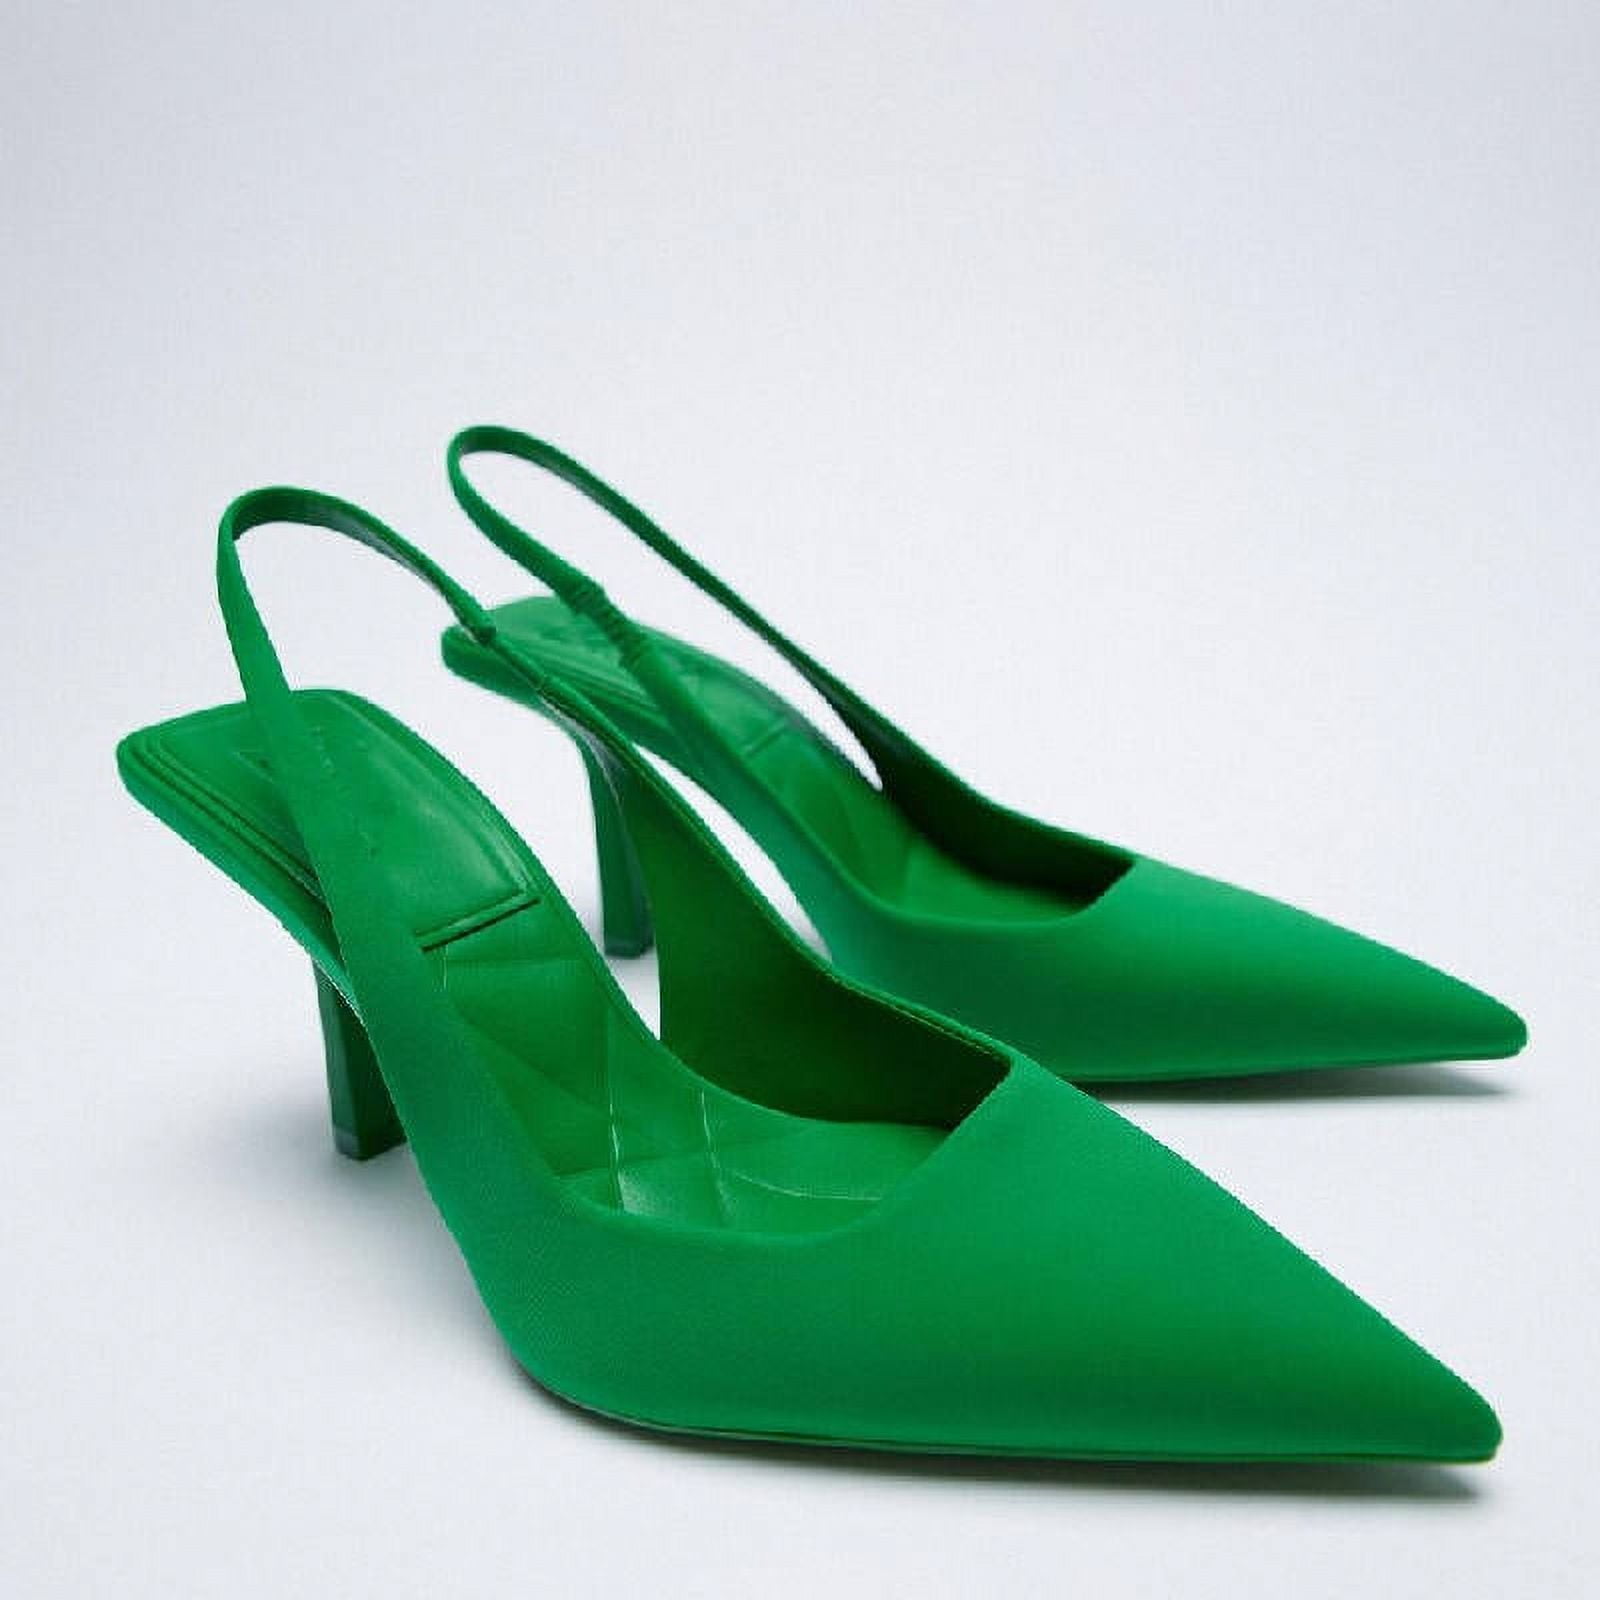 Catwalk pencil heels sandal for women l Patent Leather sandals l  comfortable & stylish 3 inch